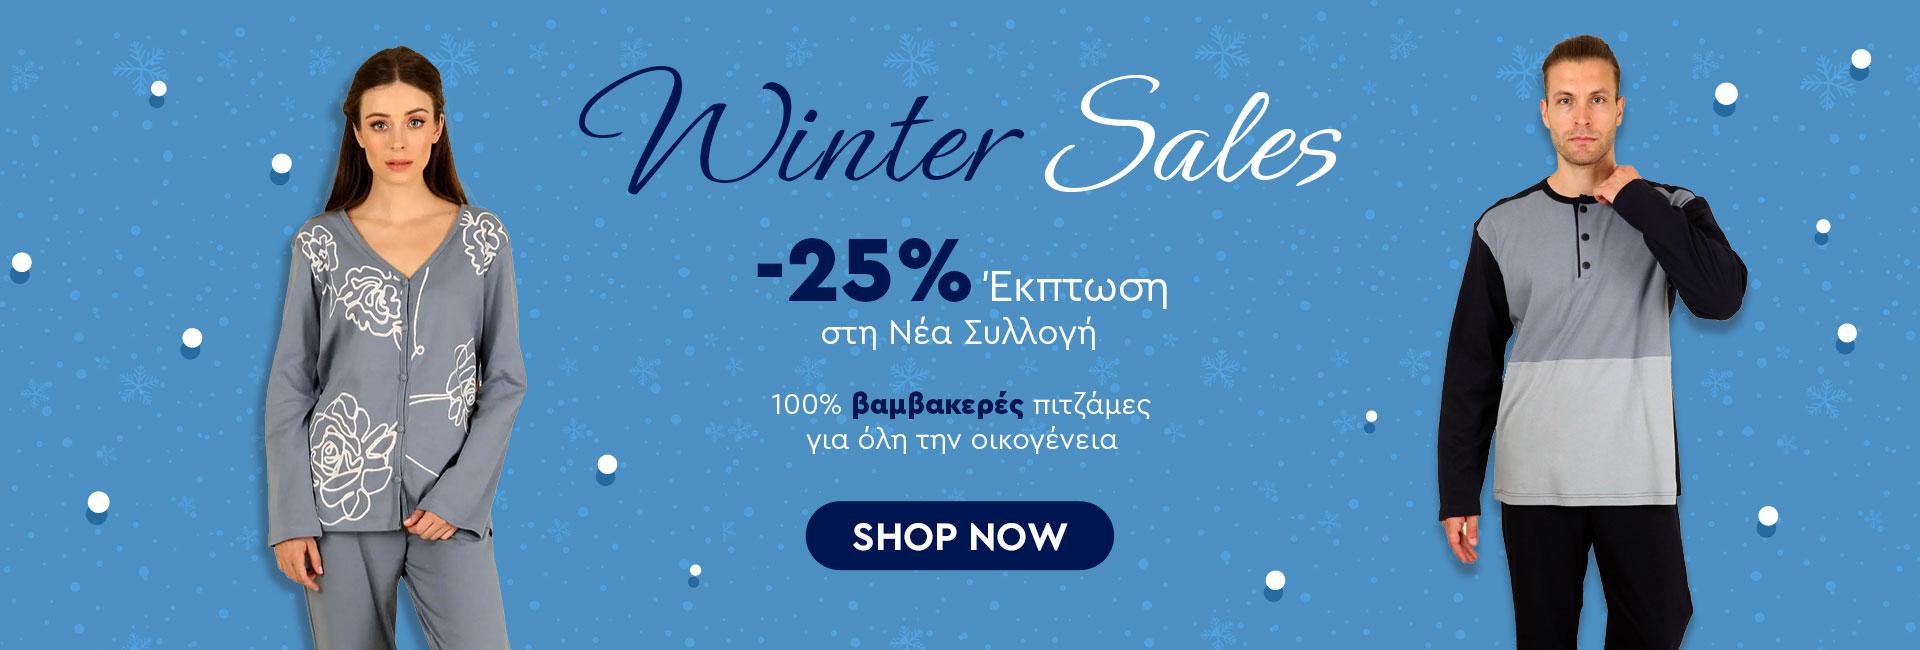 Winter Sales 25